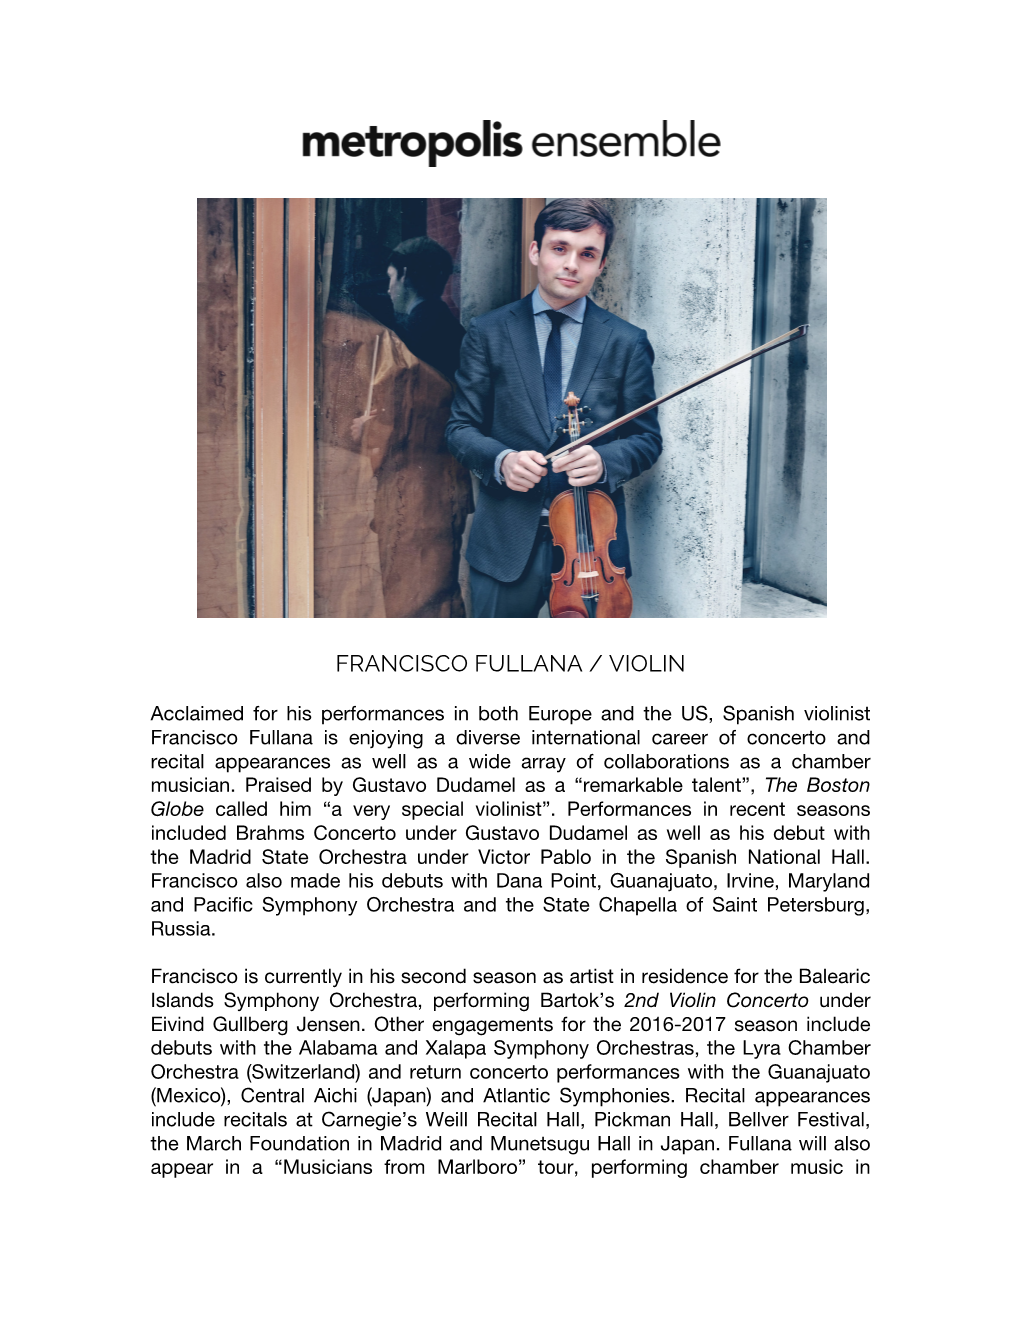 Francisco Fullana / Violin